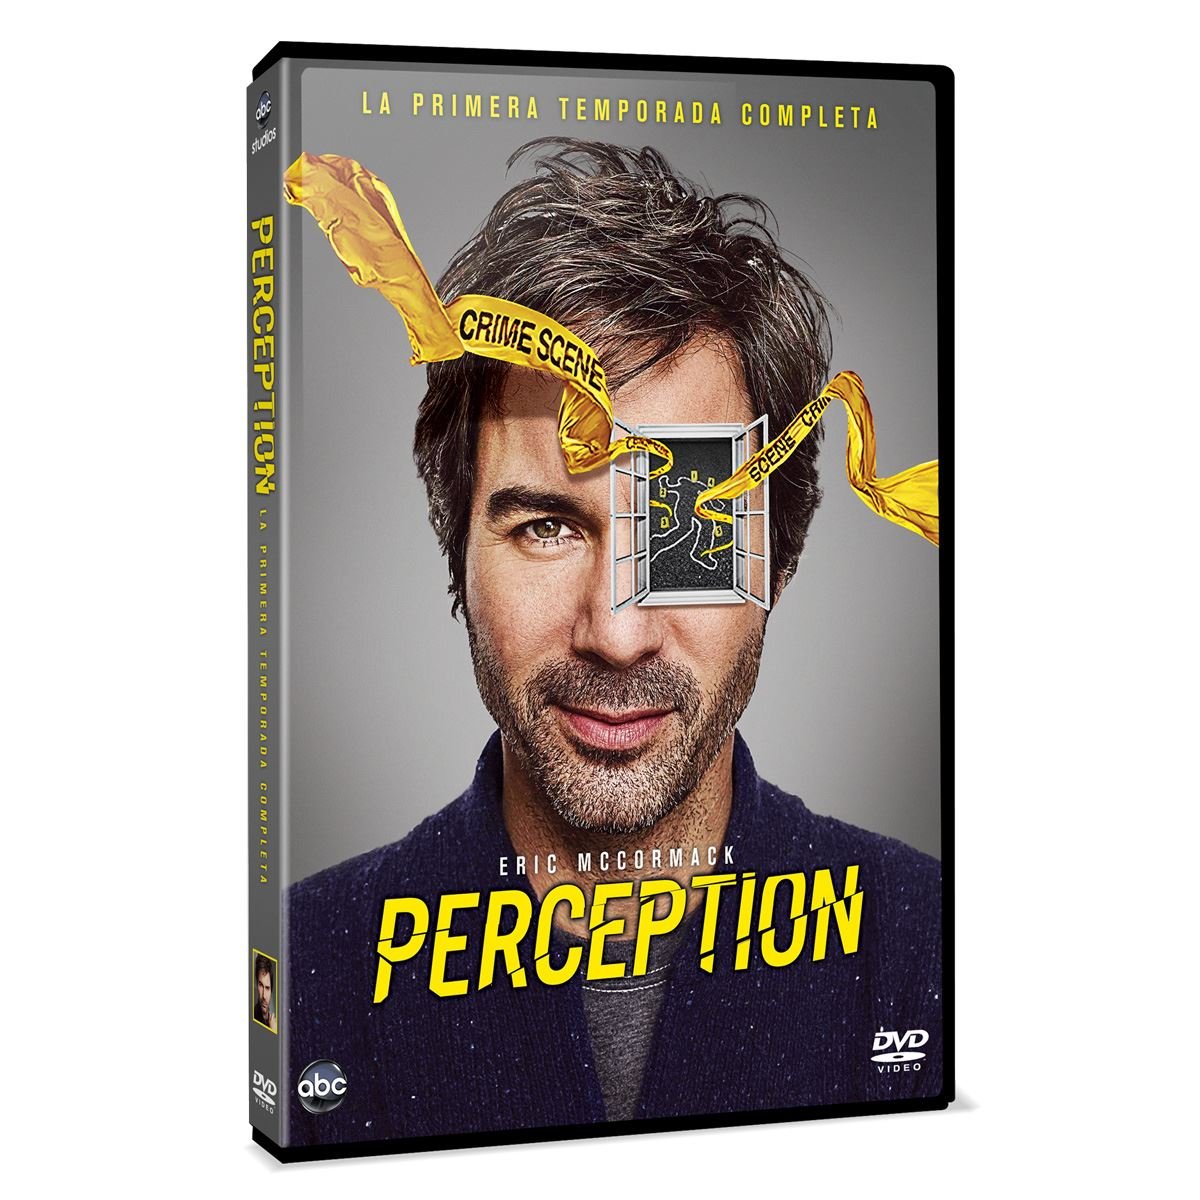 DVD Perception: La primera temporada completa